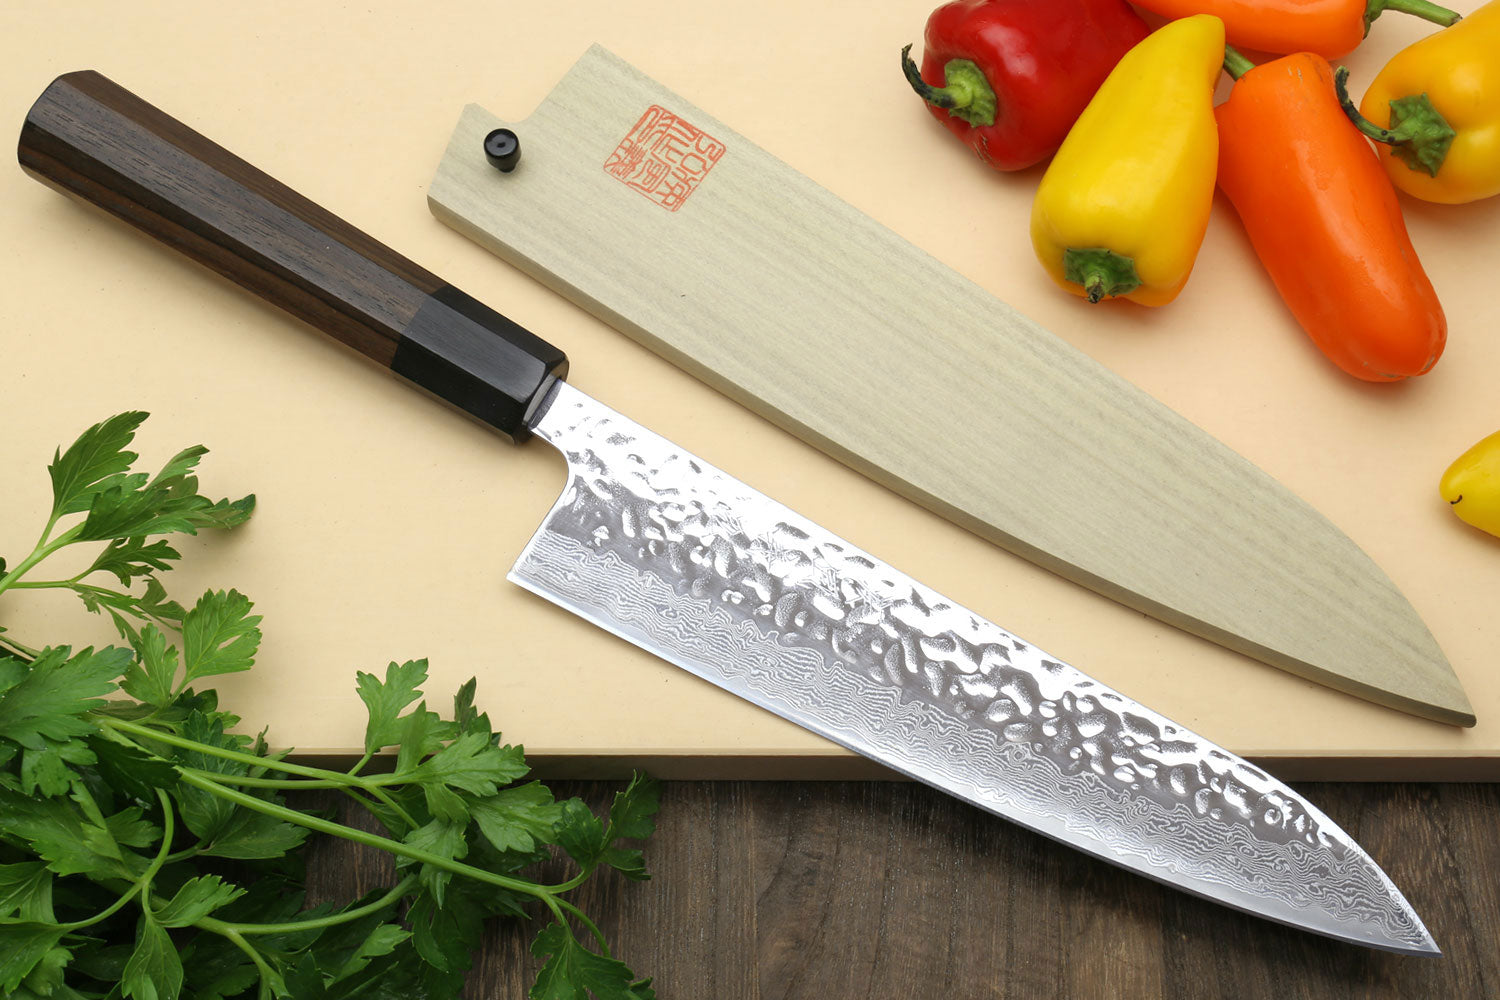 Best Kitchen Knives 8 Inch Chef Knife AUS-10 Japanese Damascus